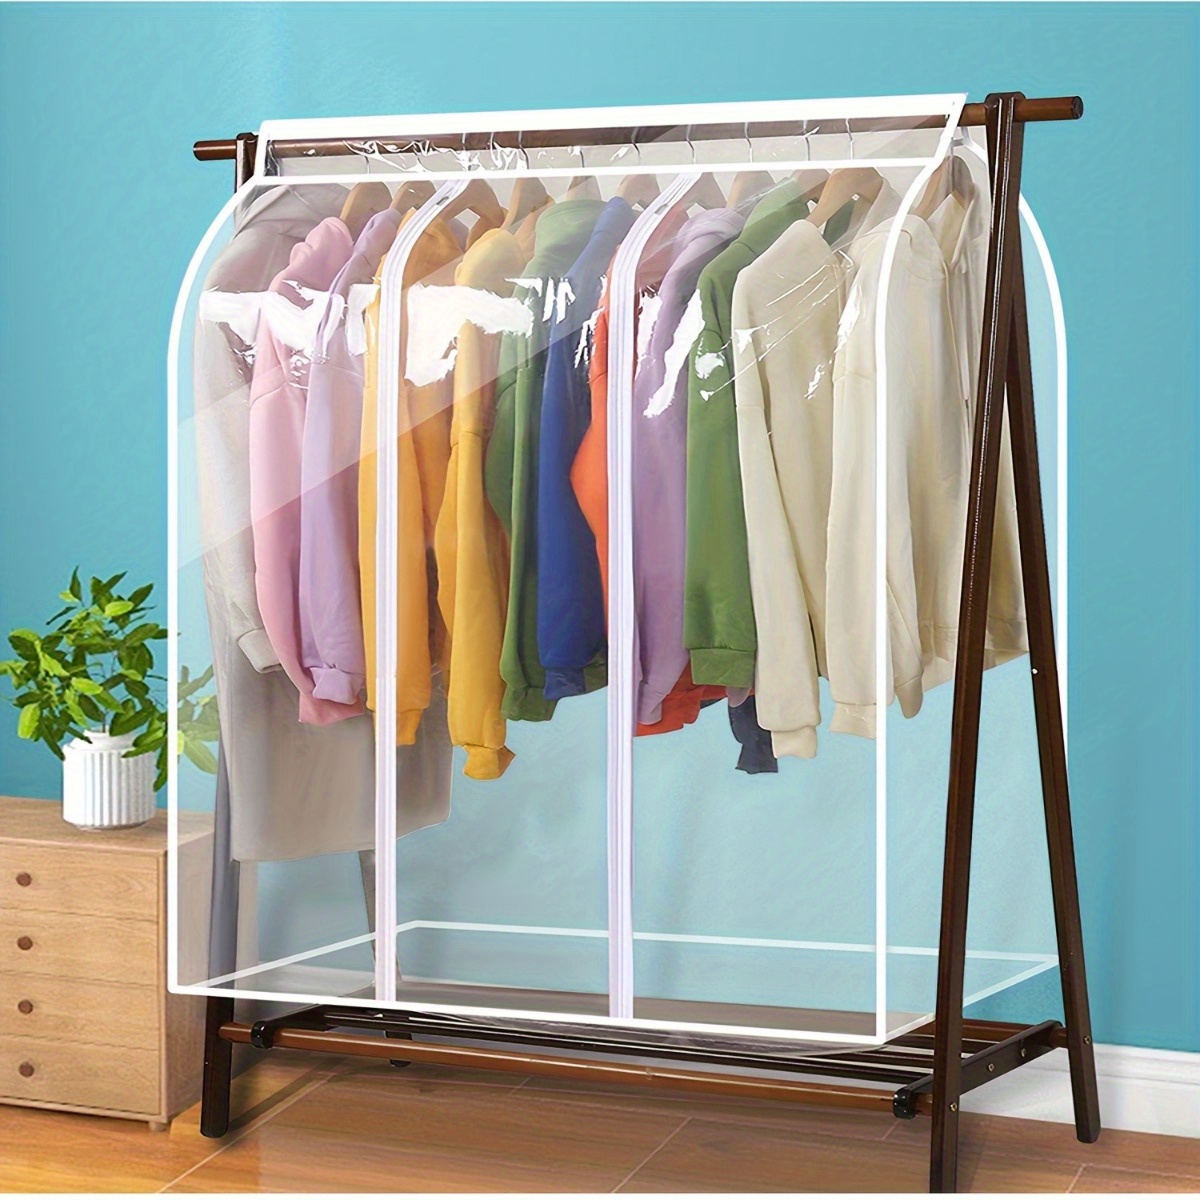 

1pc Large Garment Dust Cover Bag, Transparent Hanging Clothes Storage For Dresses, Portable Wardrobe Organizer For Bedroom, Closet, Home, Dorm Use, Ideal Home Supplies, Dorm Essentials